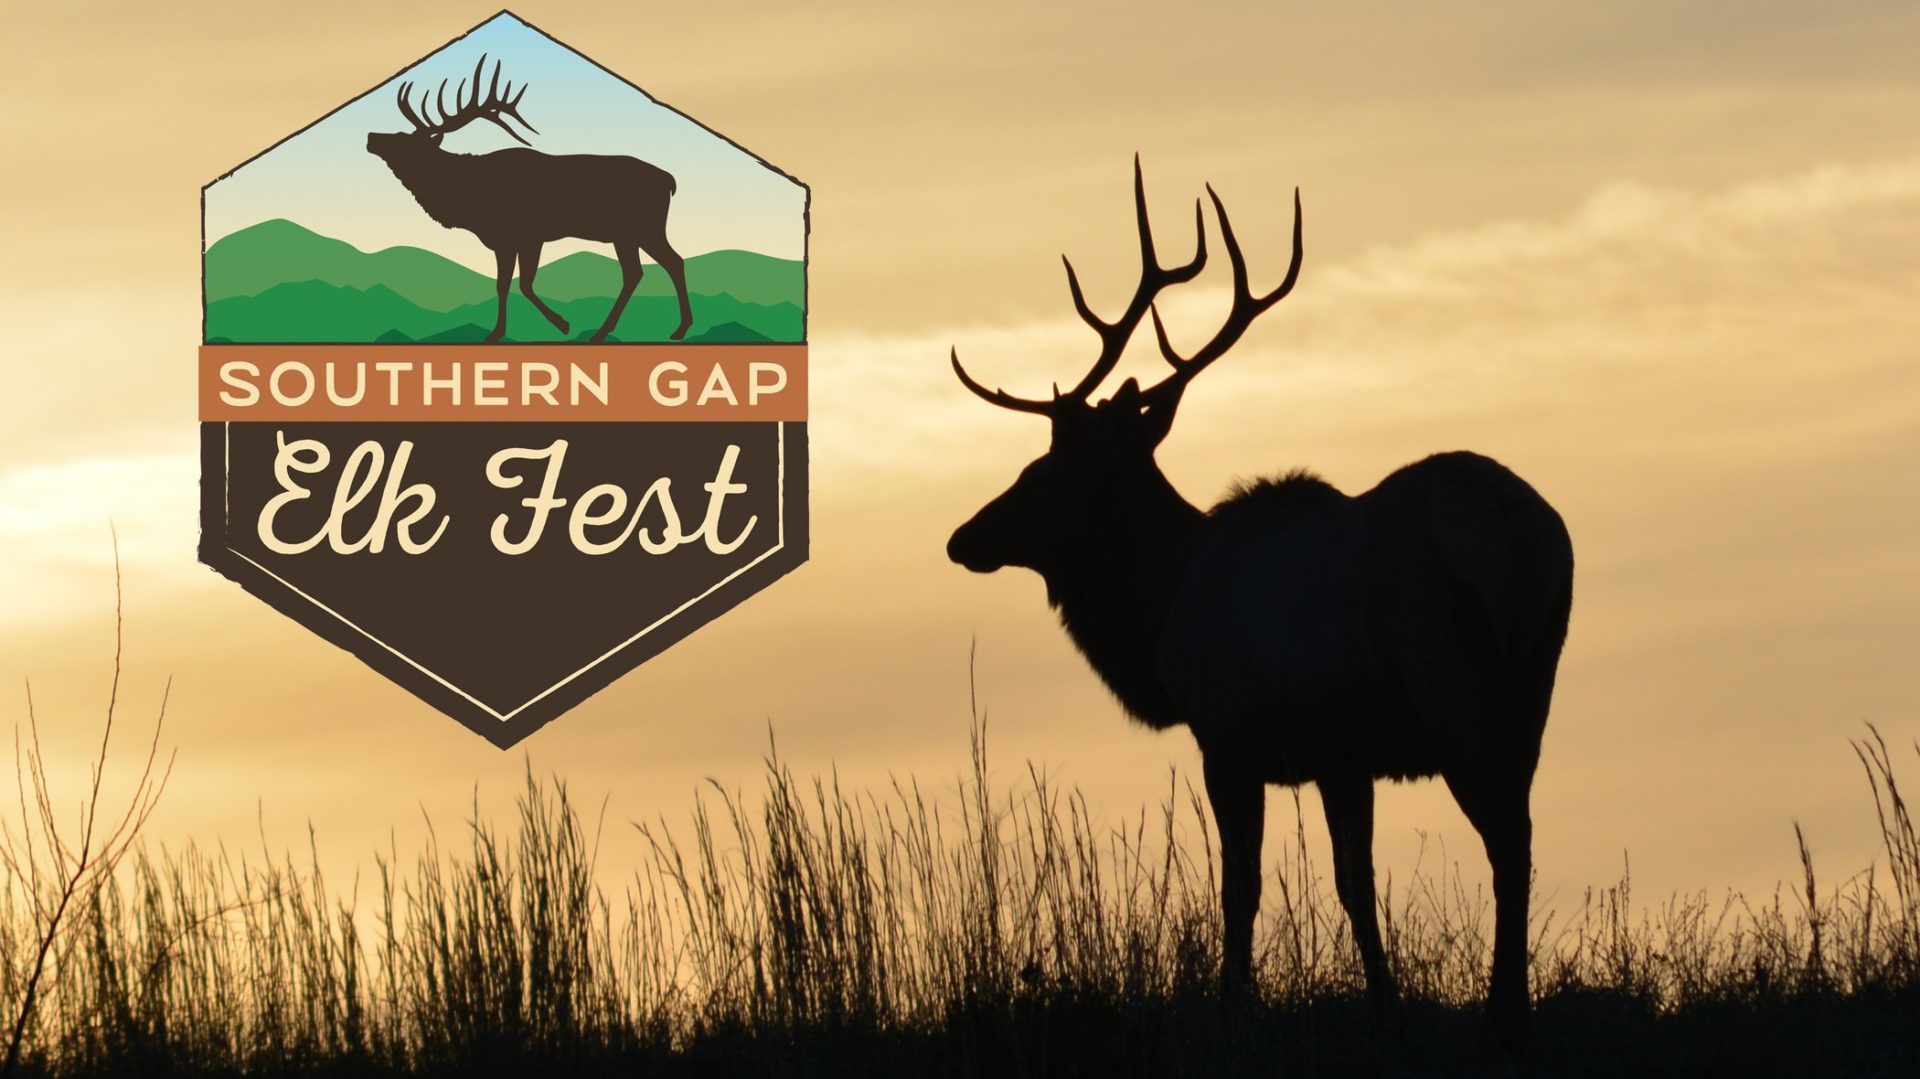 Southern Gap Elk Fest happening in Grundy, Va Oct 1417 Environment